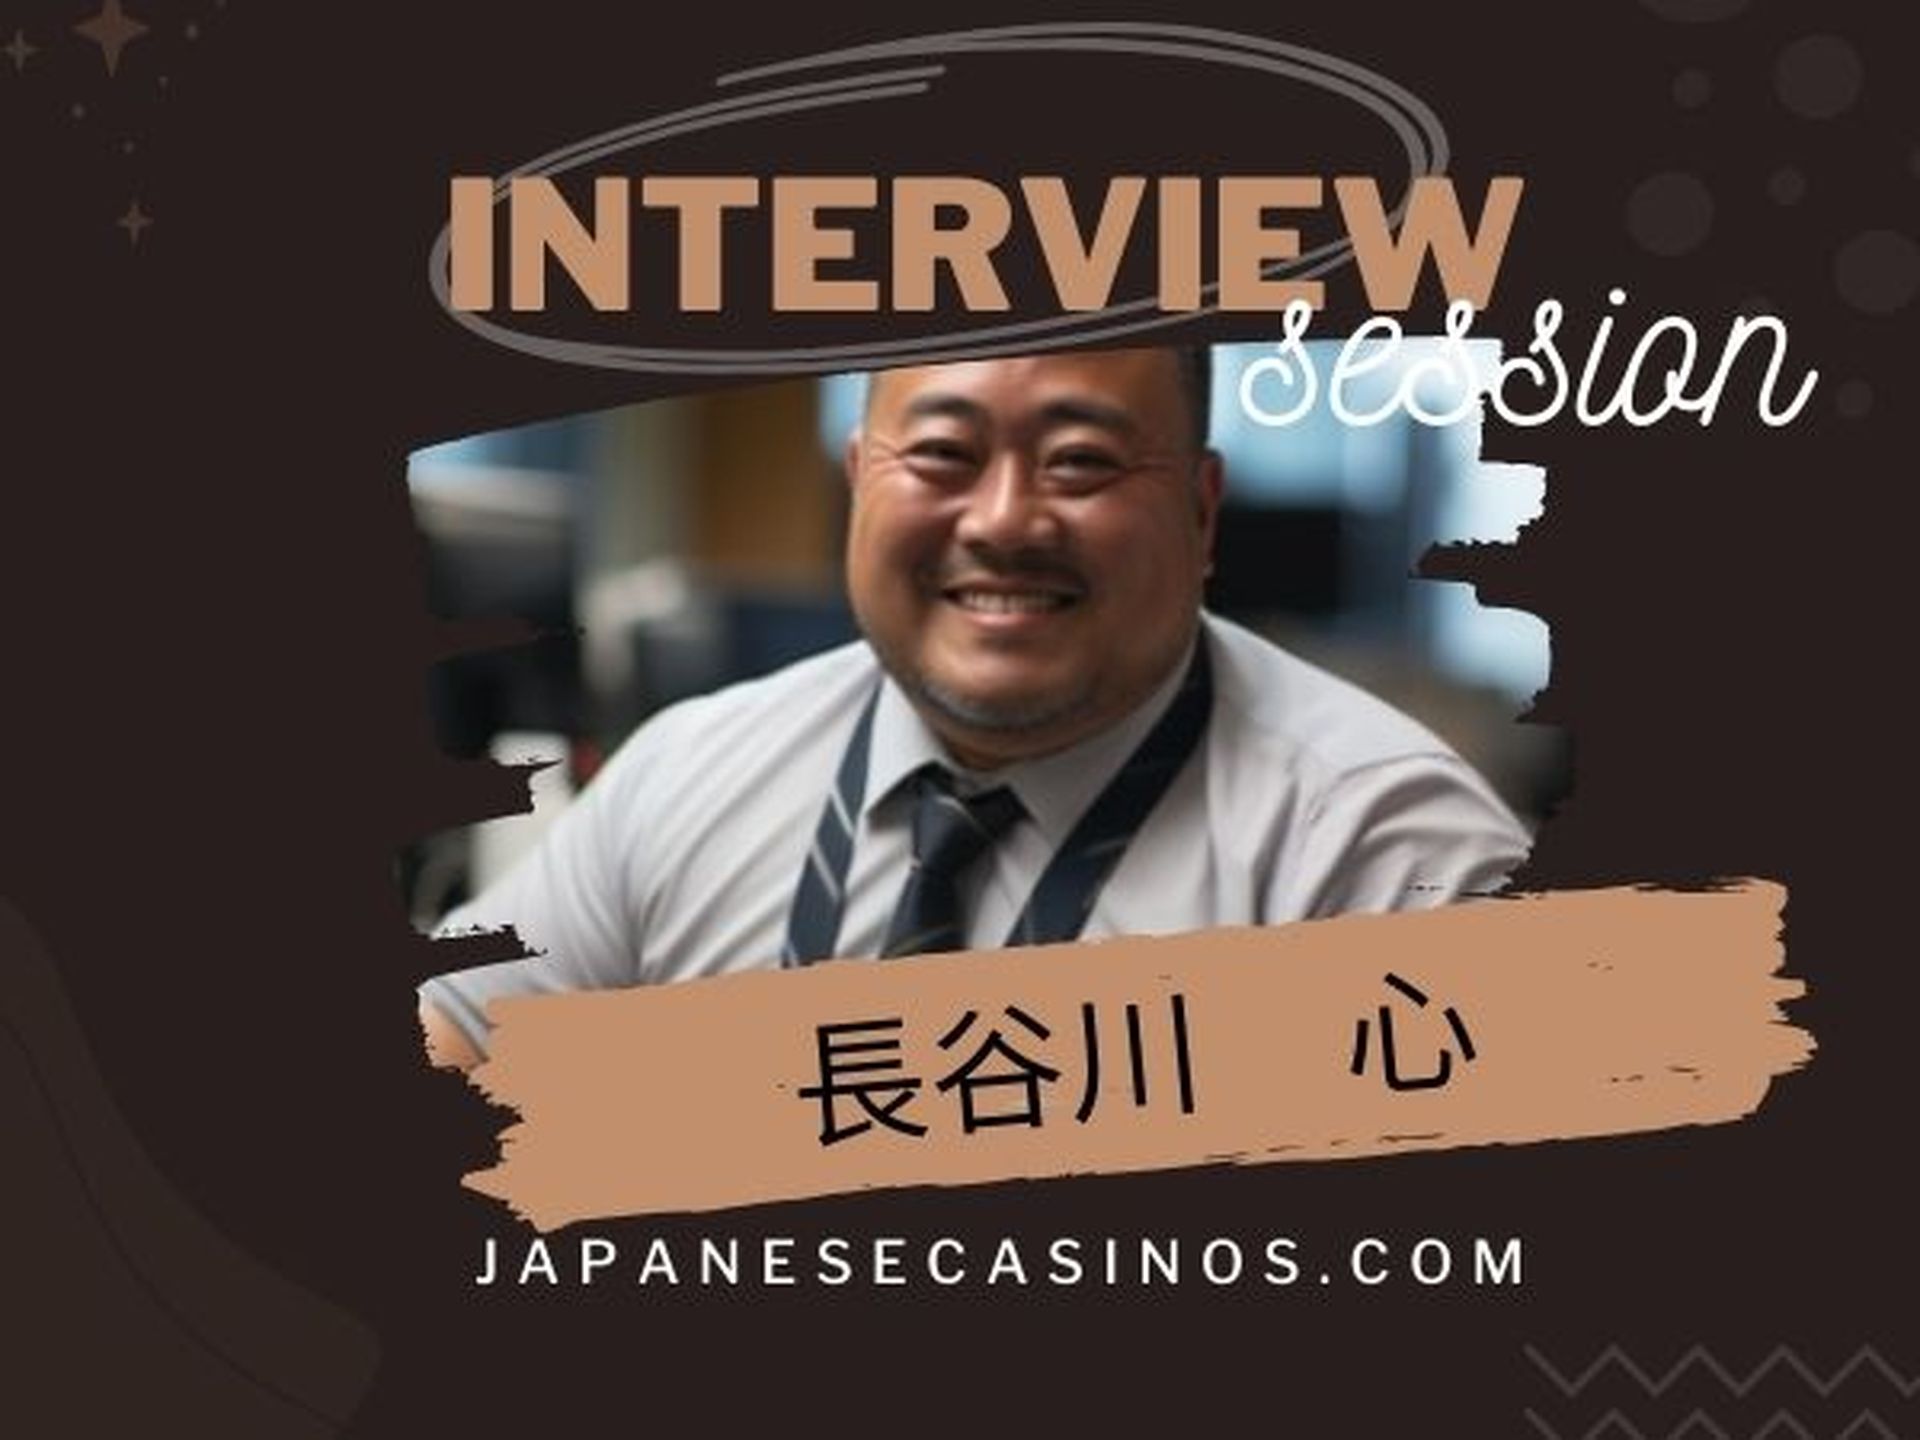 Safe gambling: Expert tips from Shin Hasegawa